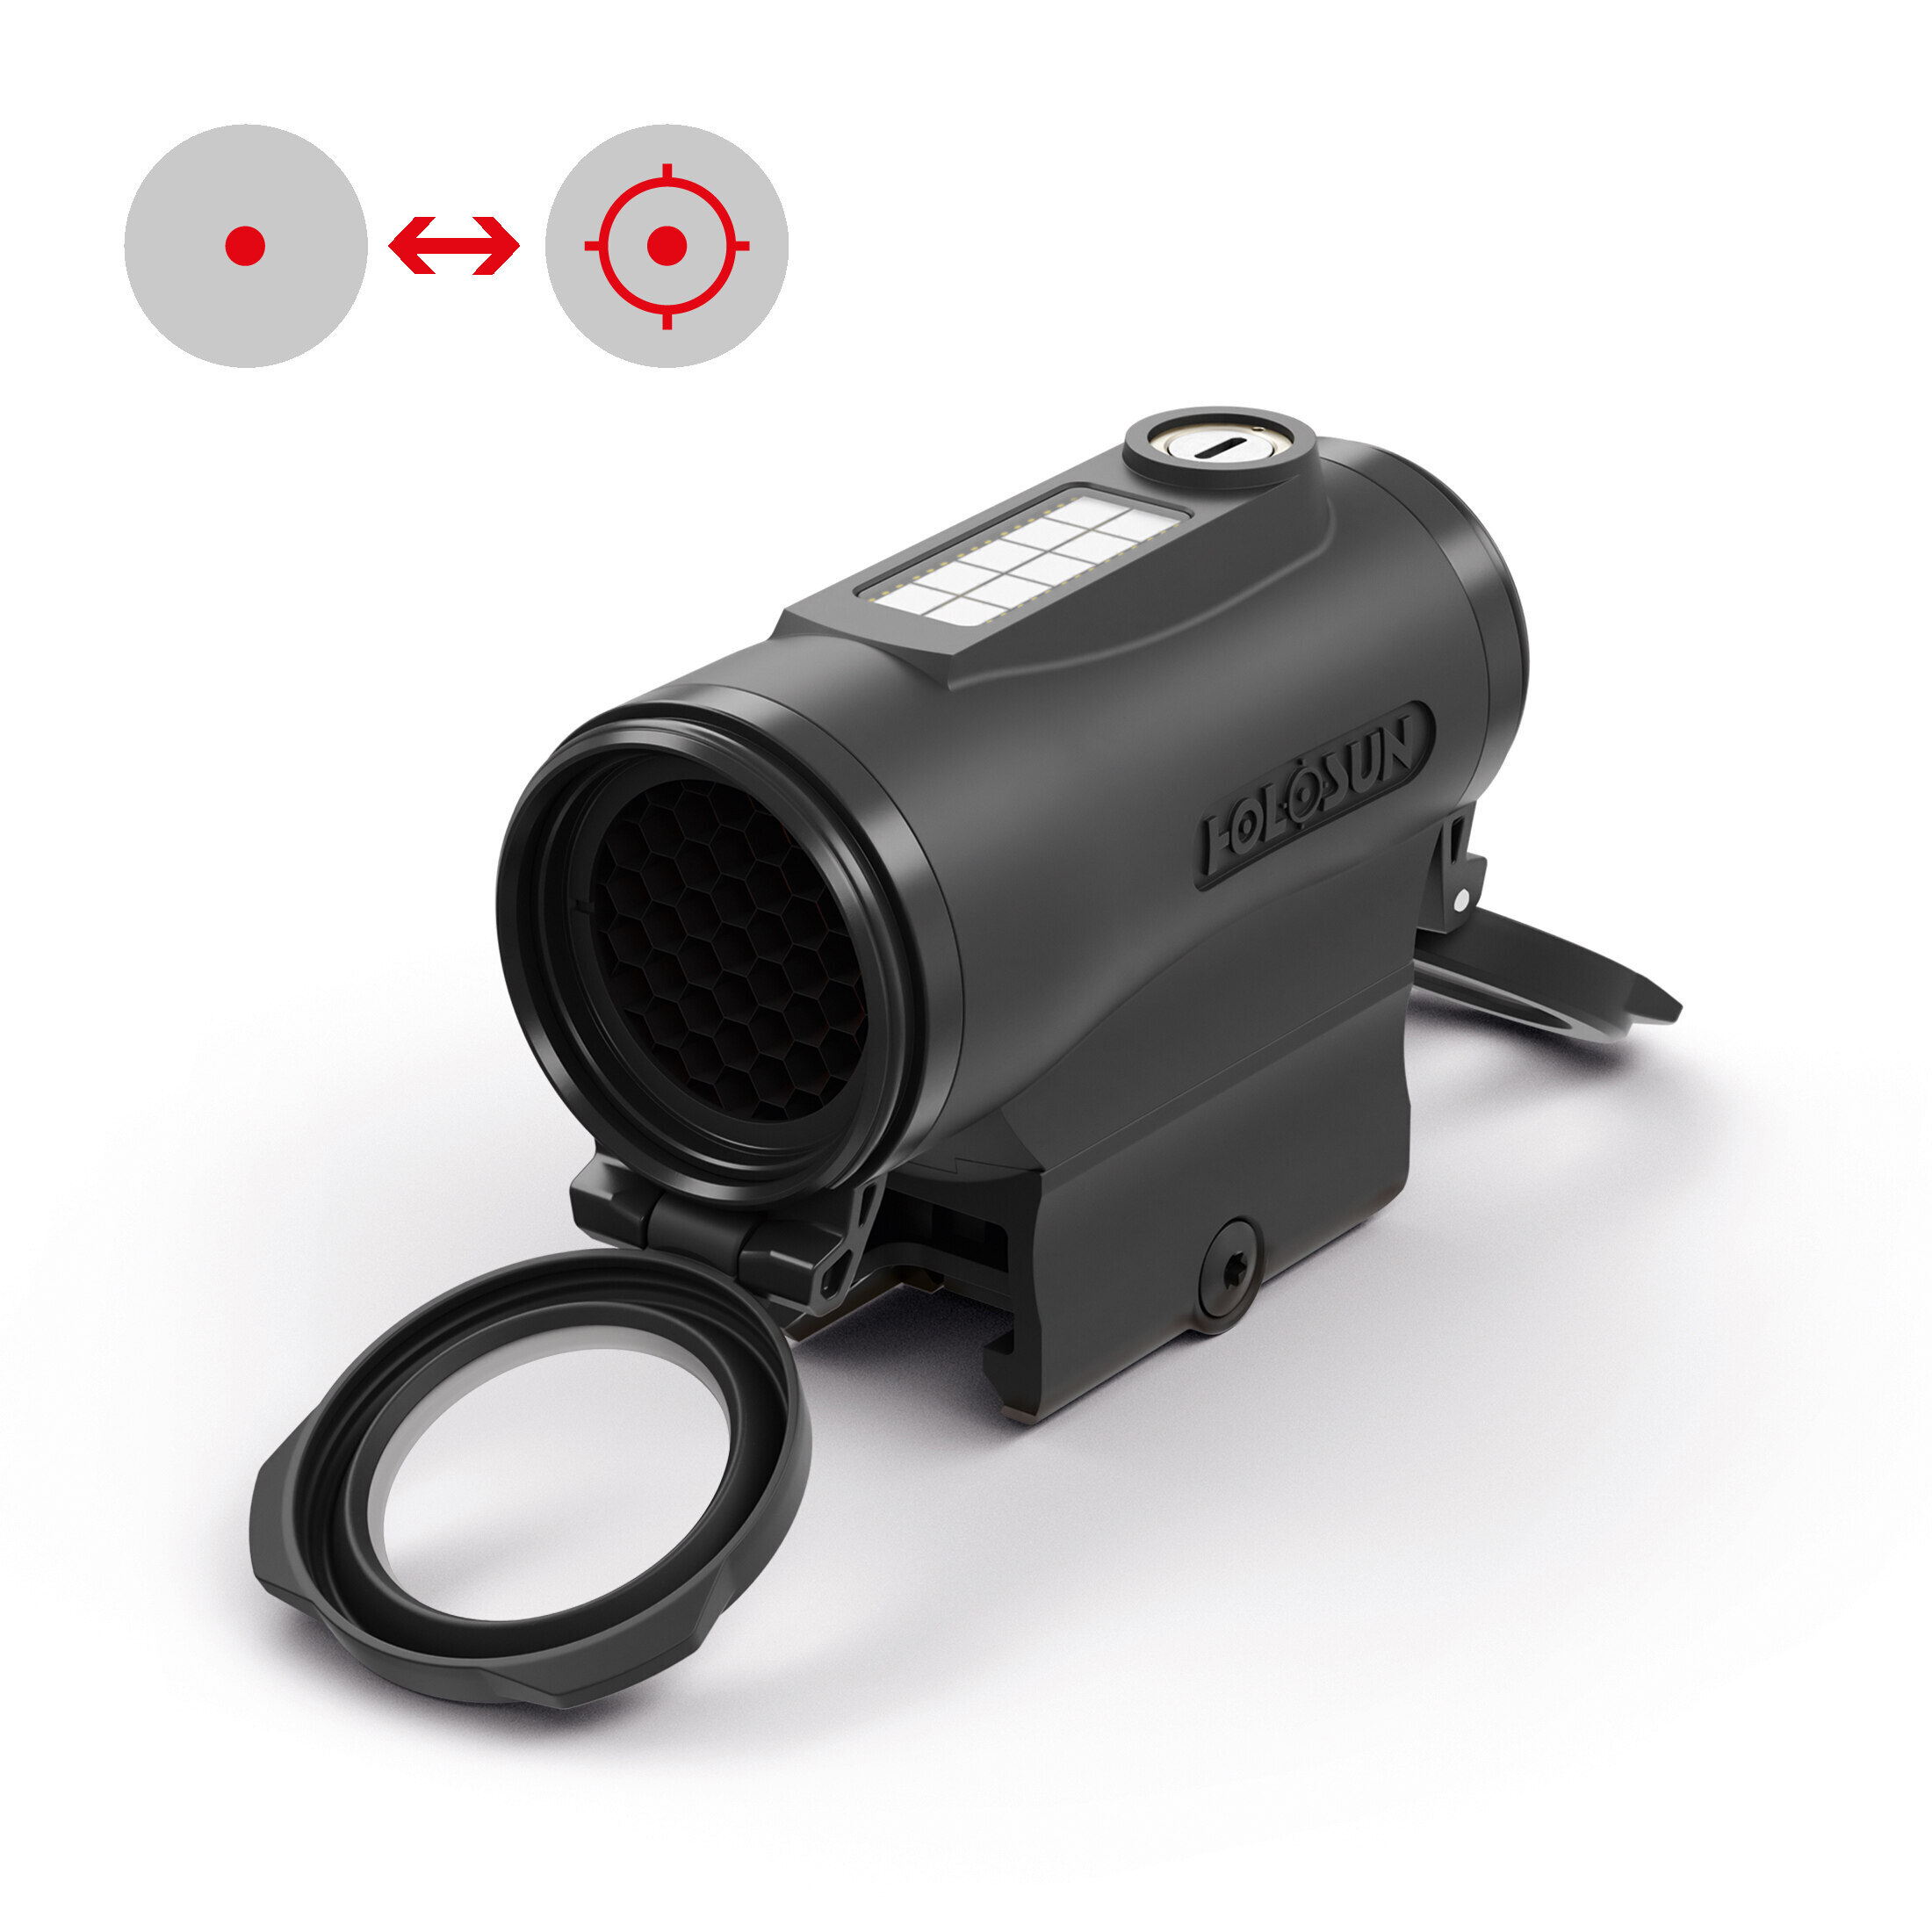 Holosun HE530C-RD Microdot 30mm Red dot sight, exchangeable 2MOA dot, 65MOA Circle, Titan, black, P…